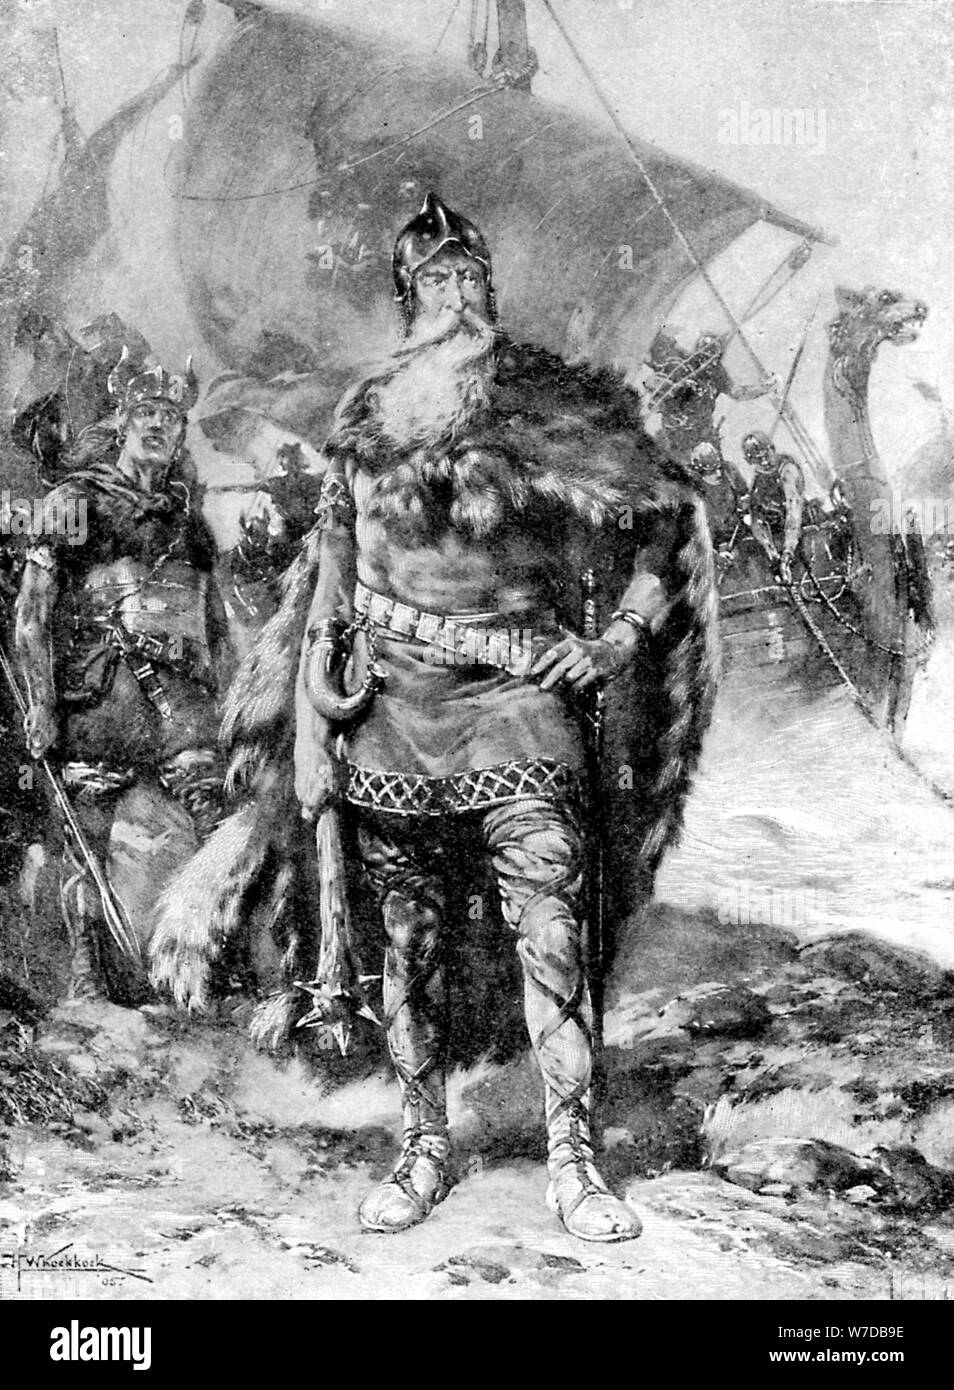 A great Viking, c1920. Artist: Hermanus Koekkoek Stock Photo